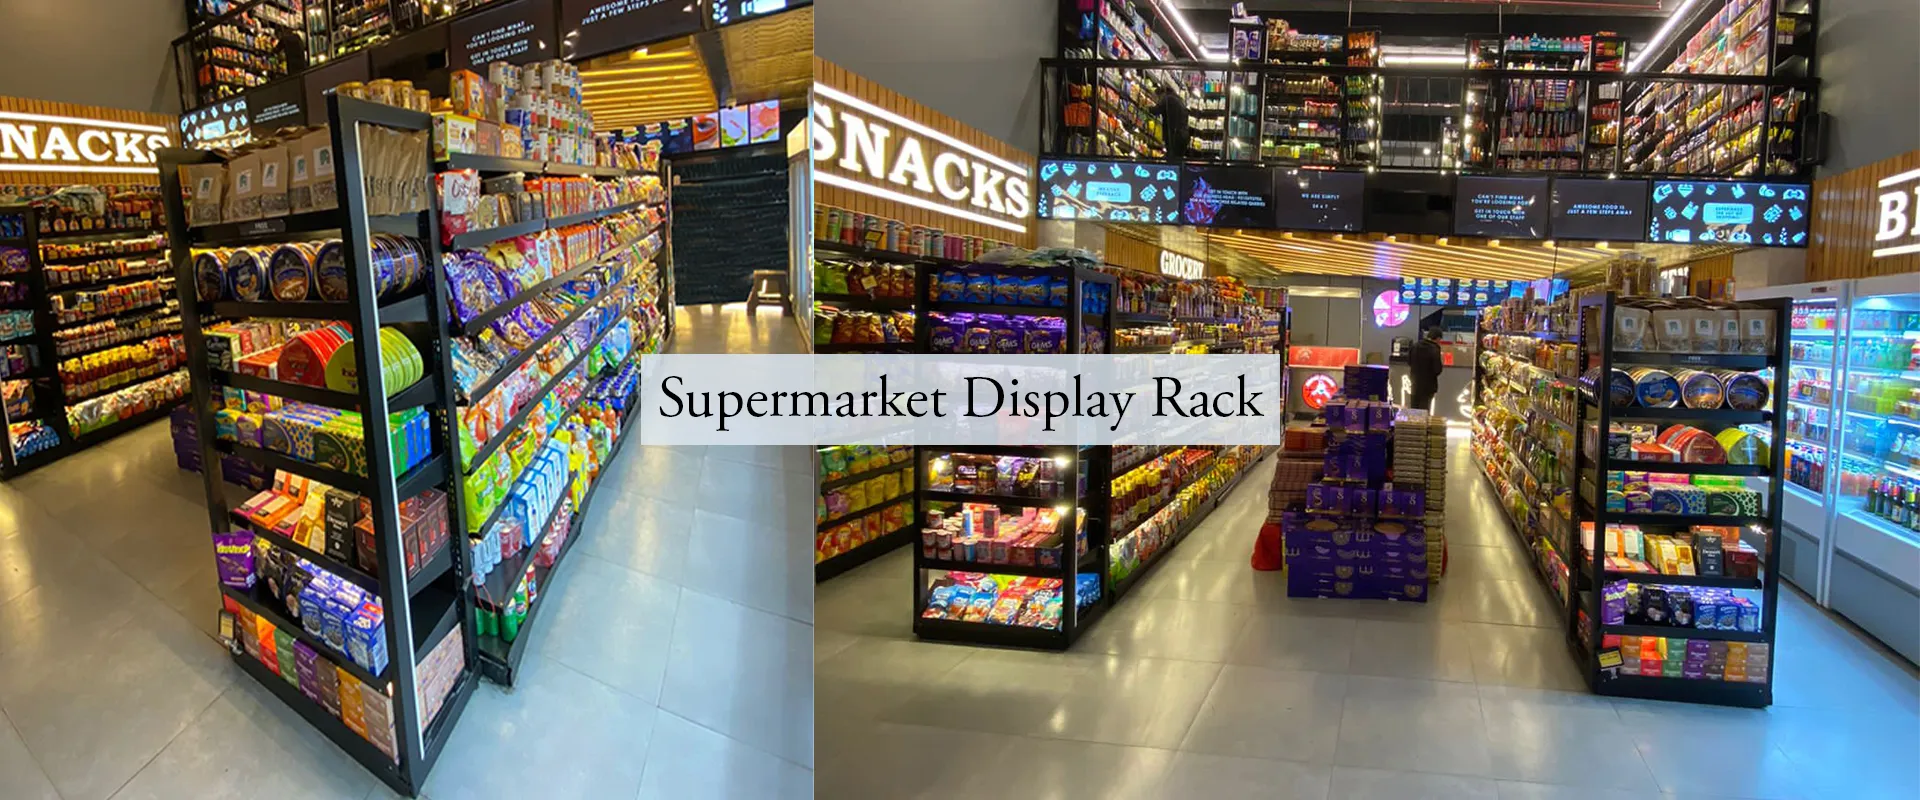 Supermarket Display Rack